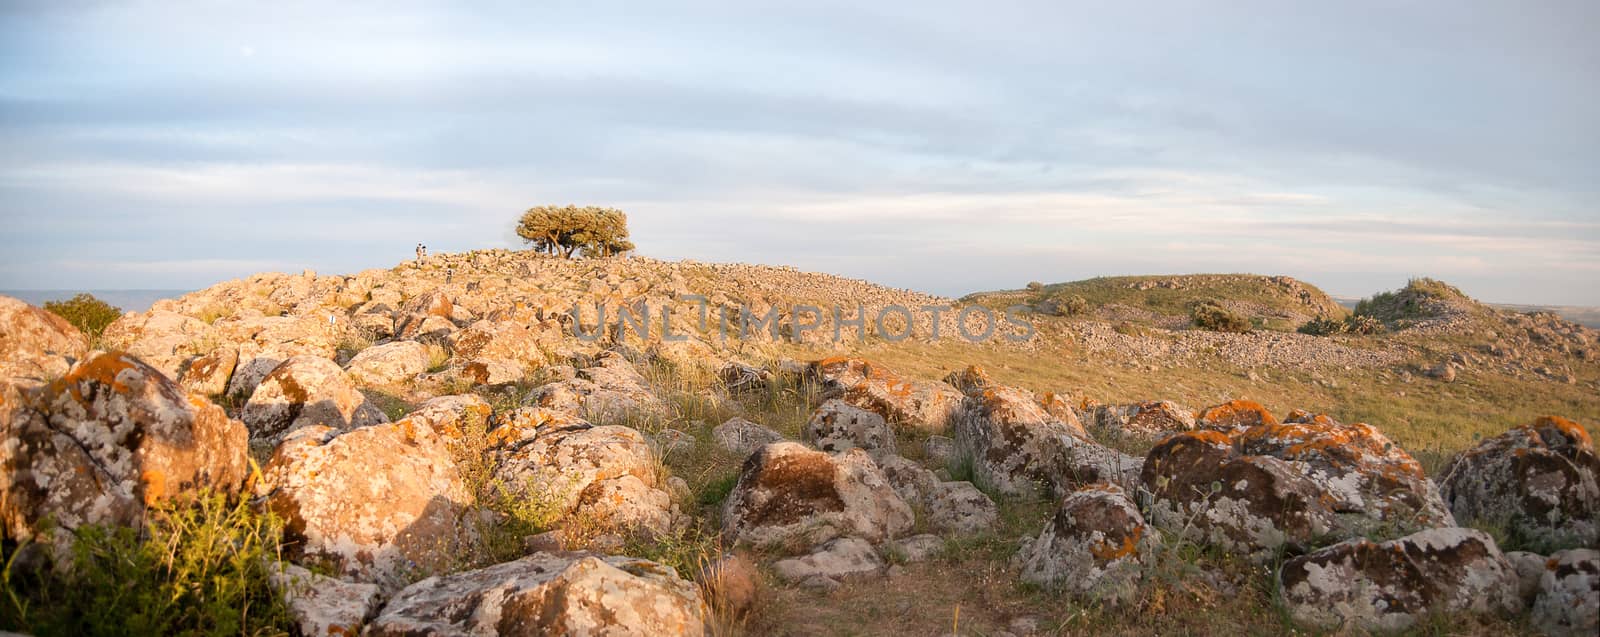 galilee panorama by javax